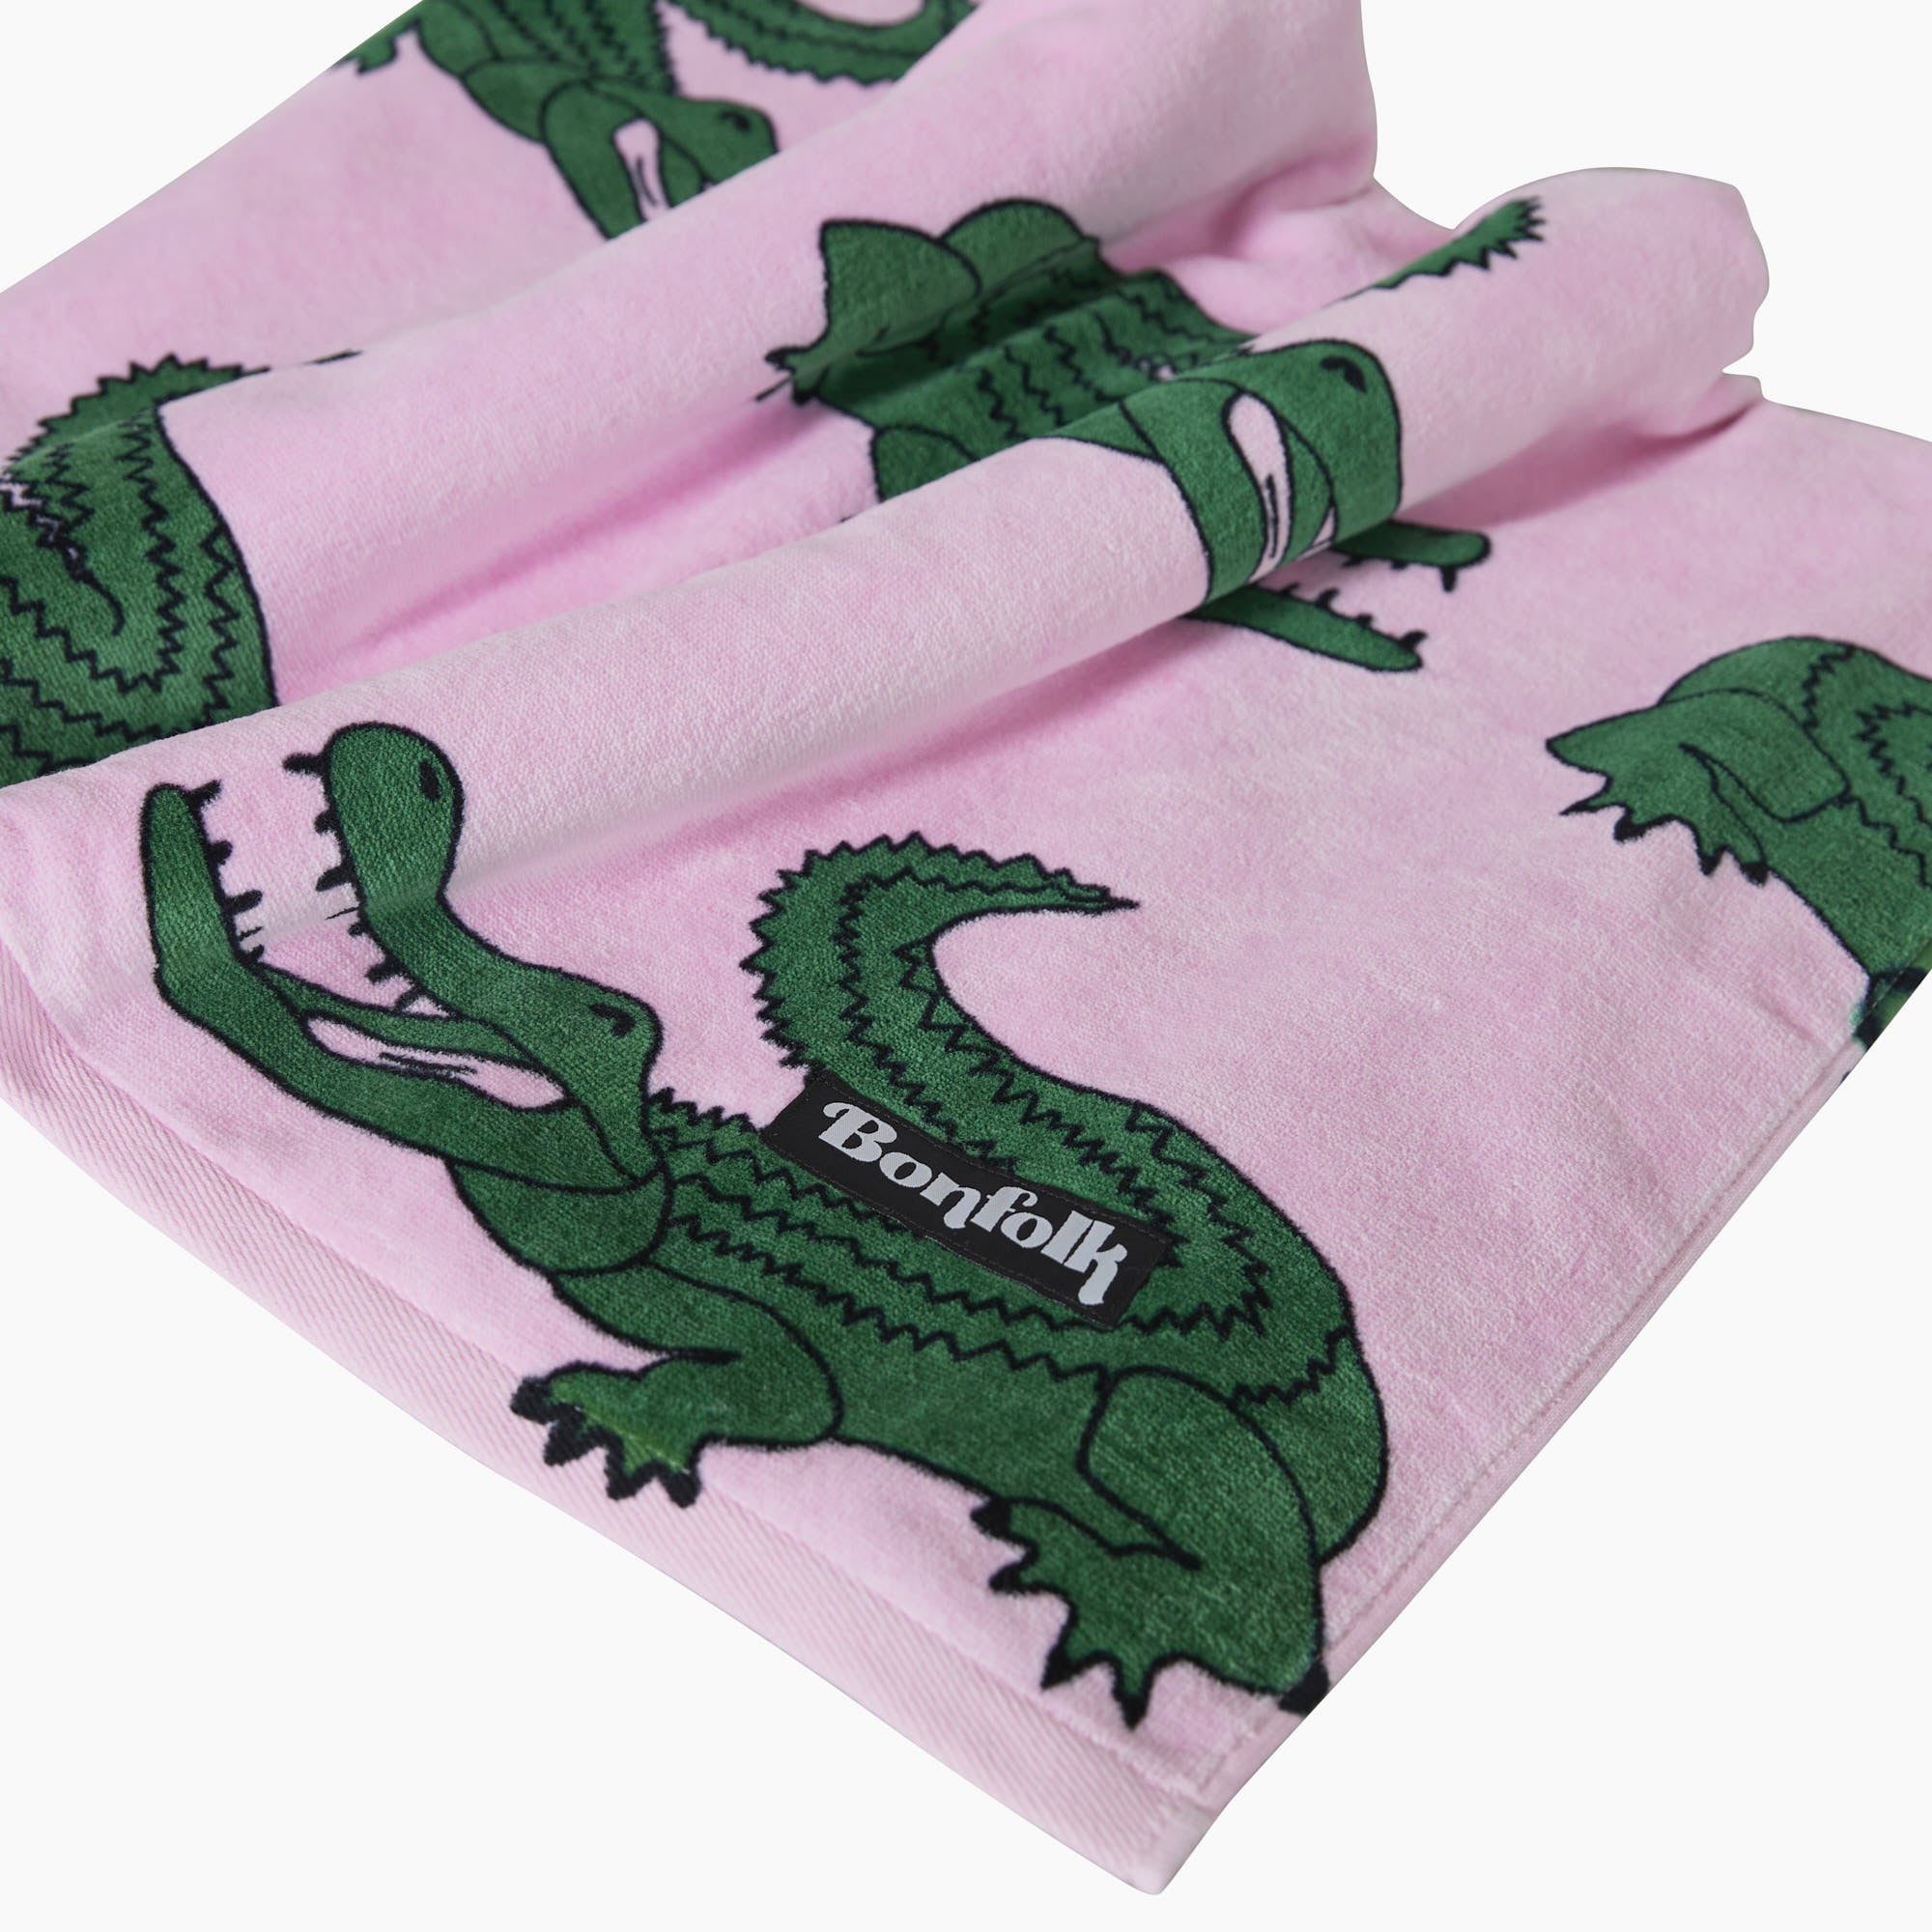 Bonfolk Gator Towel 3